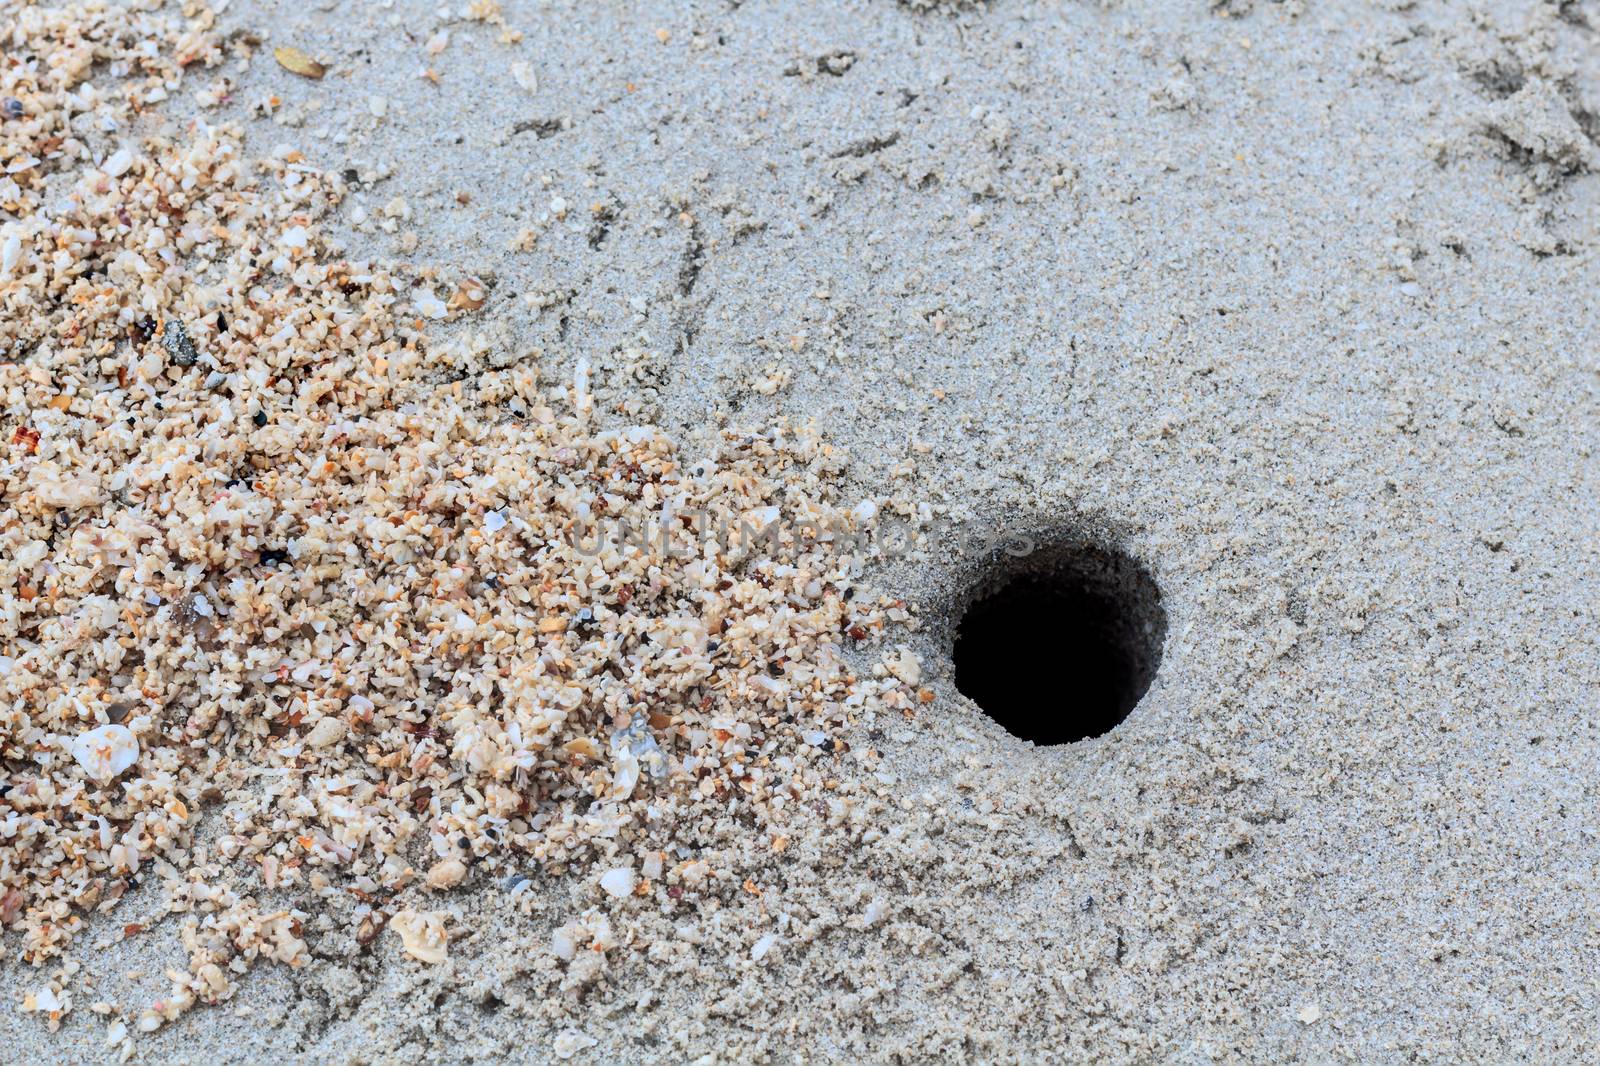 Crab hole on the Tropical Beach